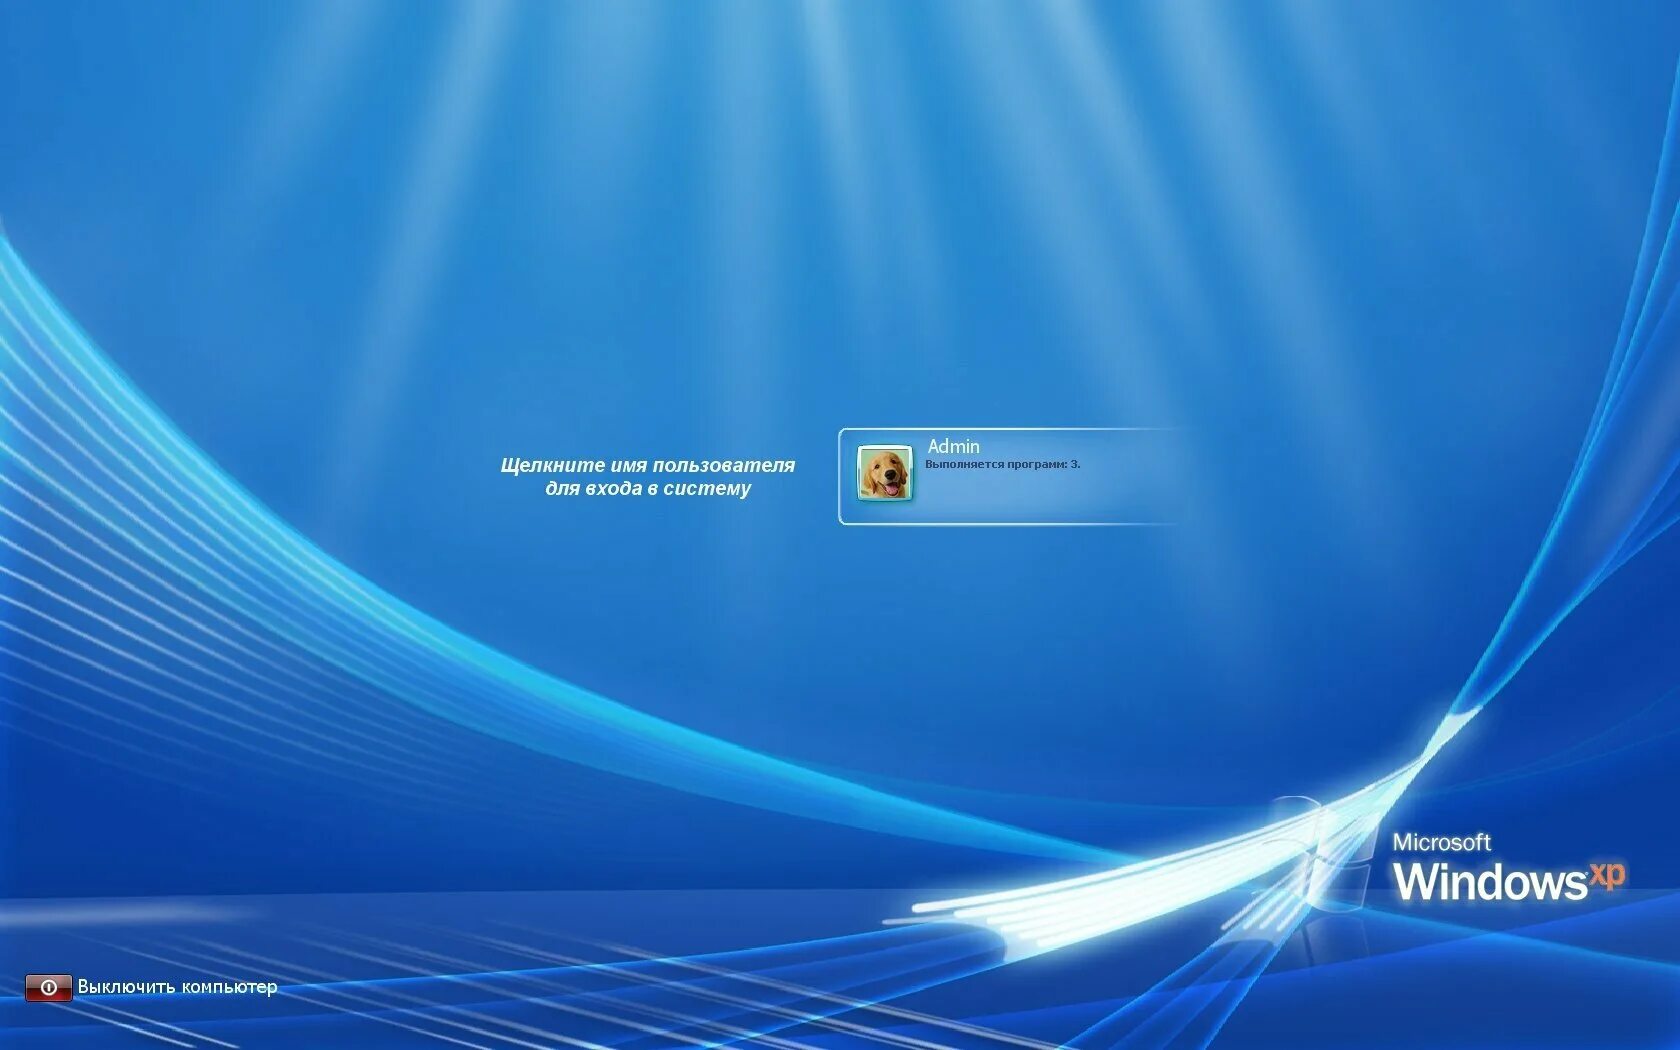 Хр 3. Windows Vista экран приветствия. Окно приветствия Windows 7. Windows XP 2008. Windows XP Приветствие.